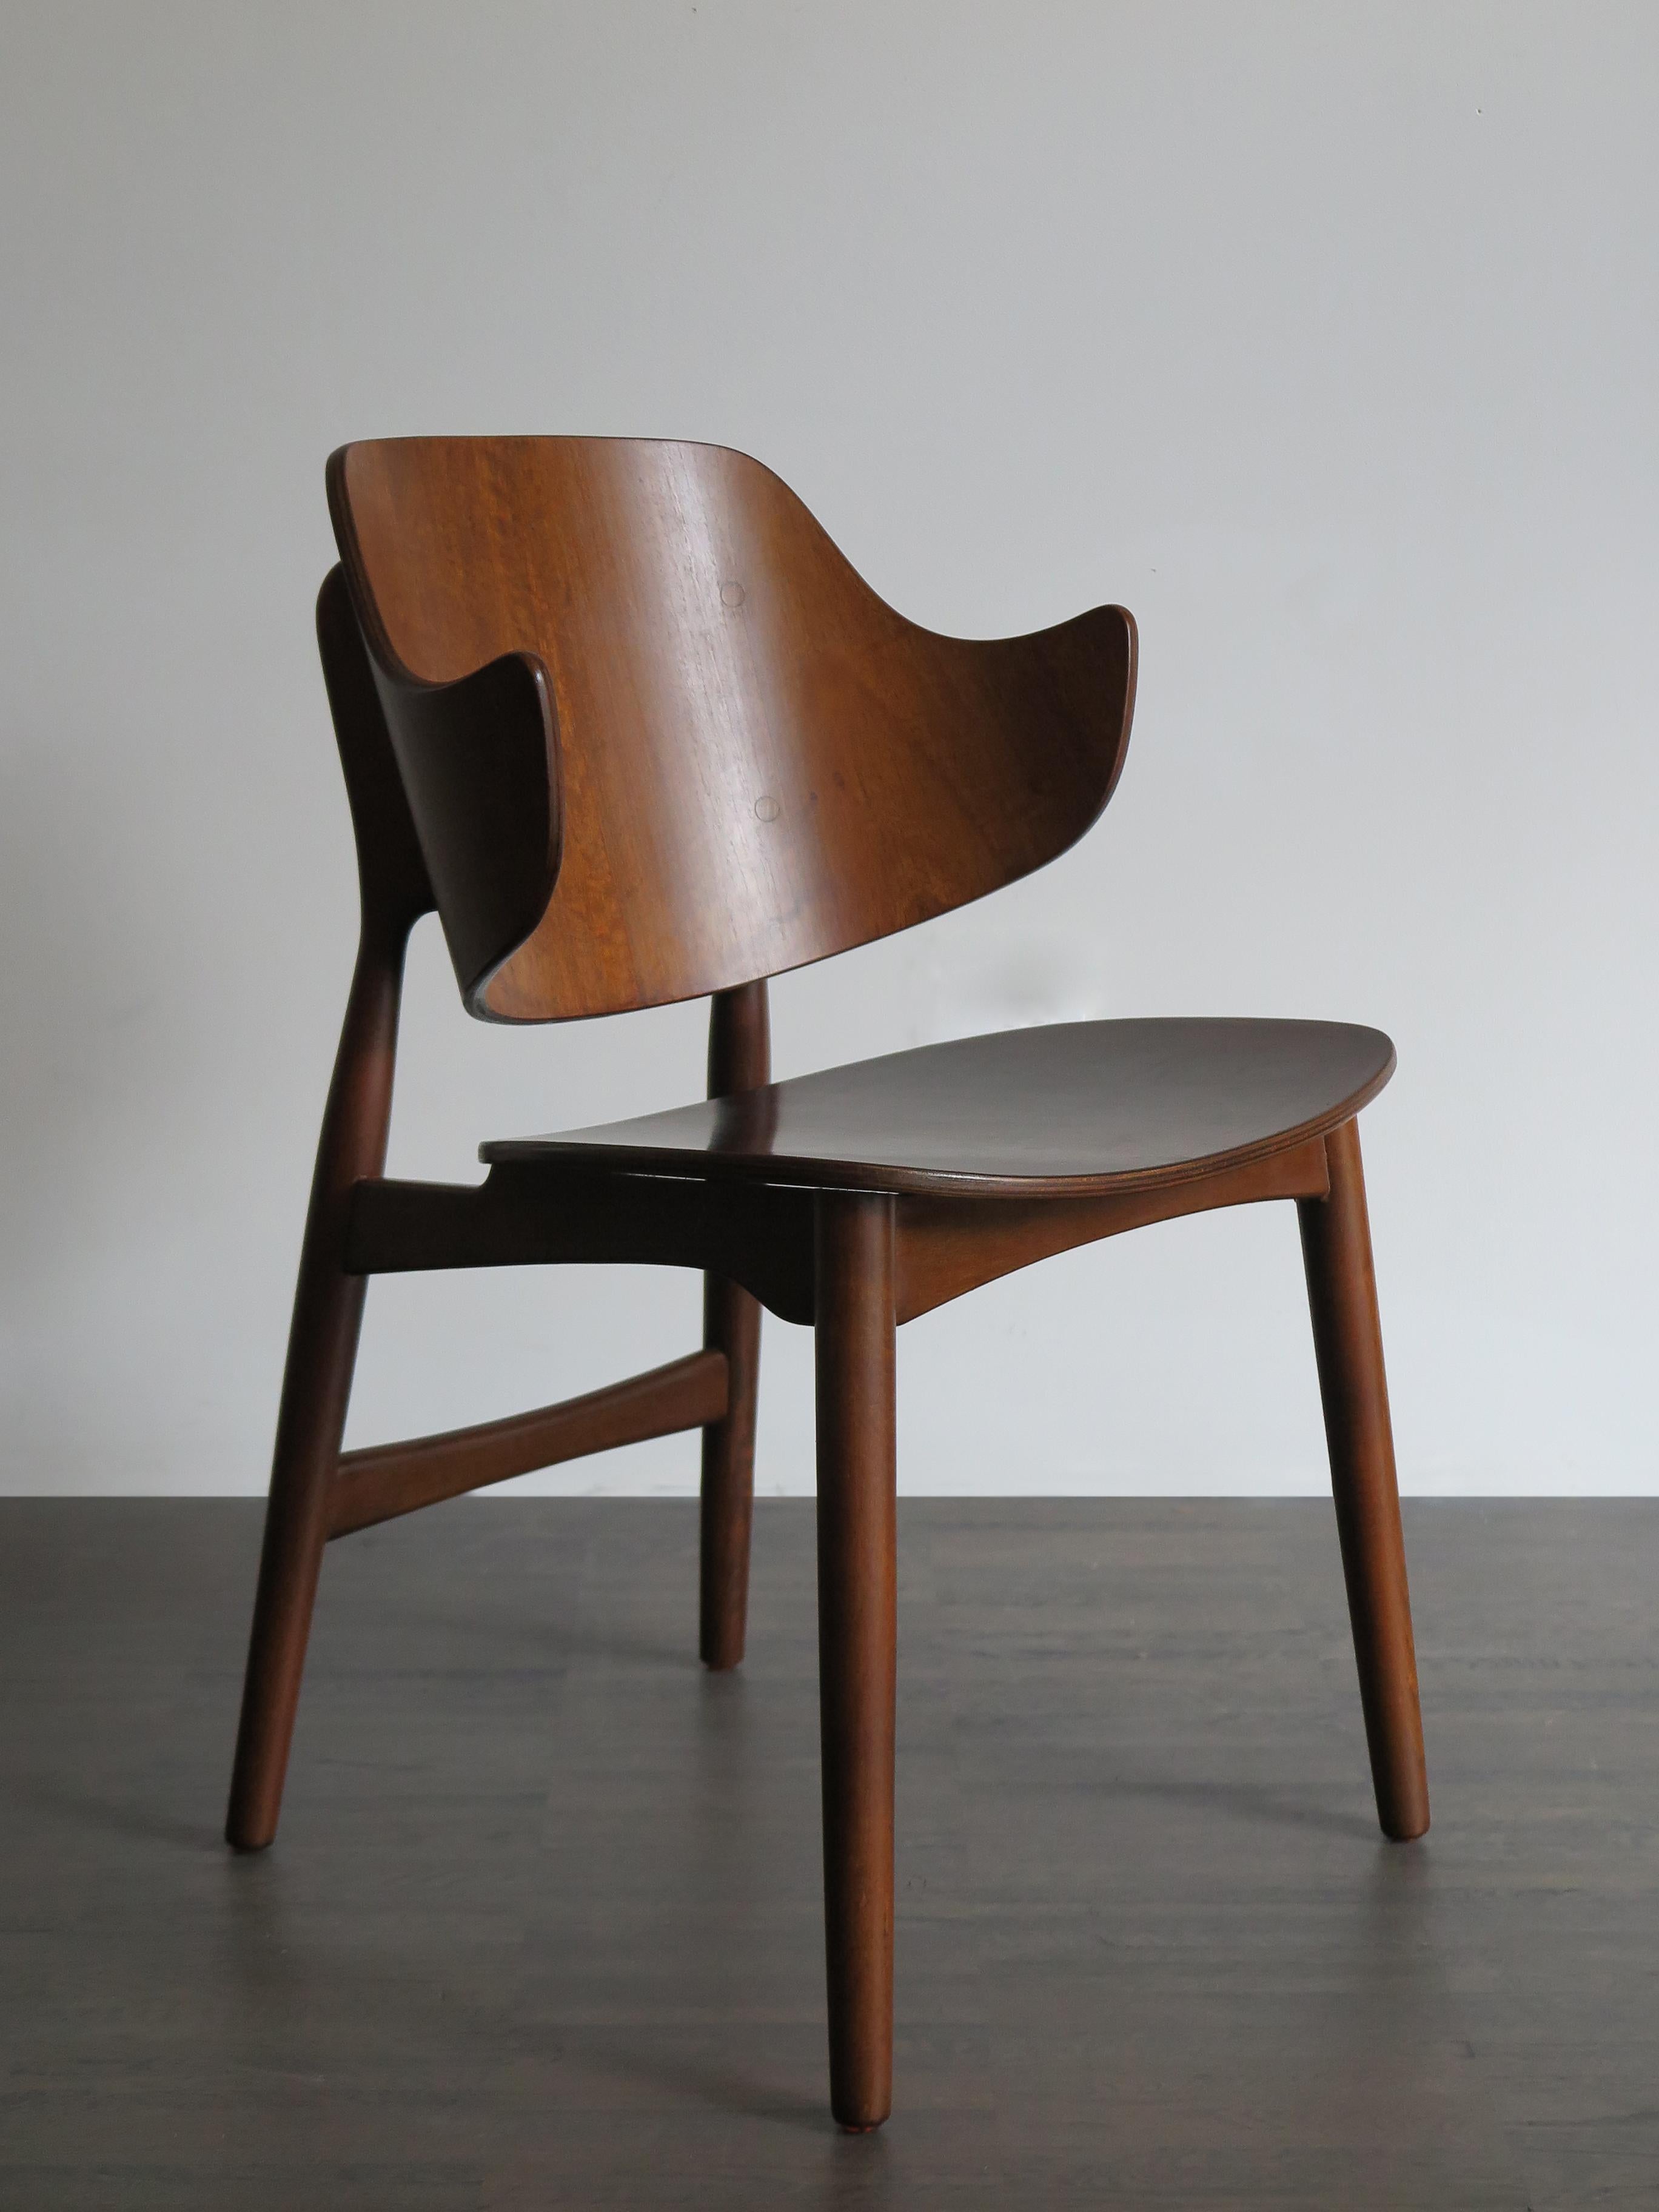 Danish Jens Hjorth Scandinavian Midcentury Modern Wood Chairs Armchairs, 1950s